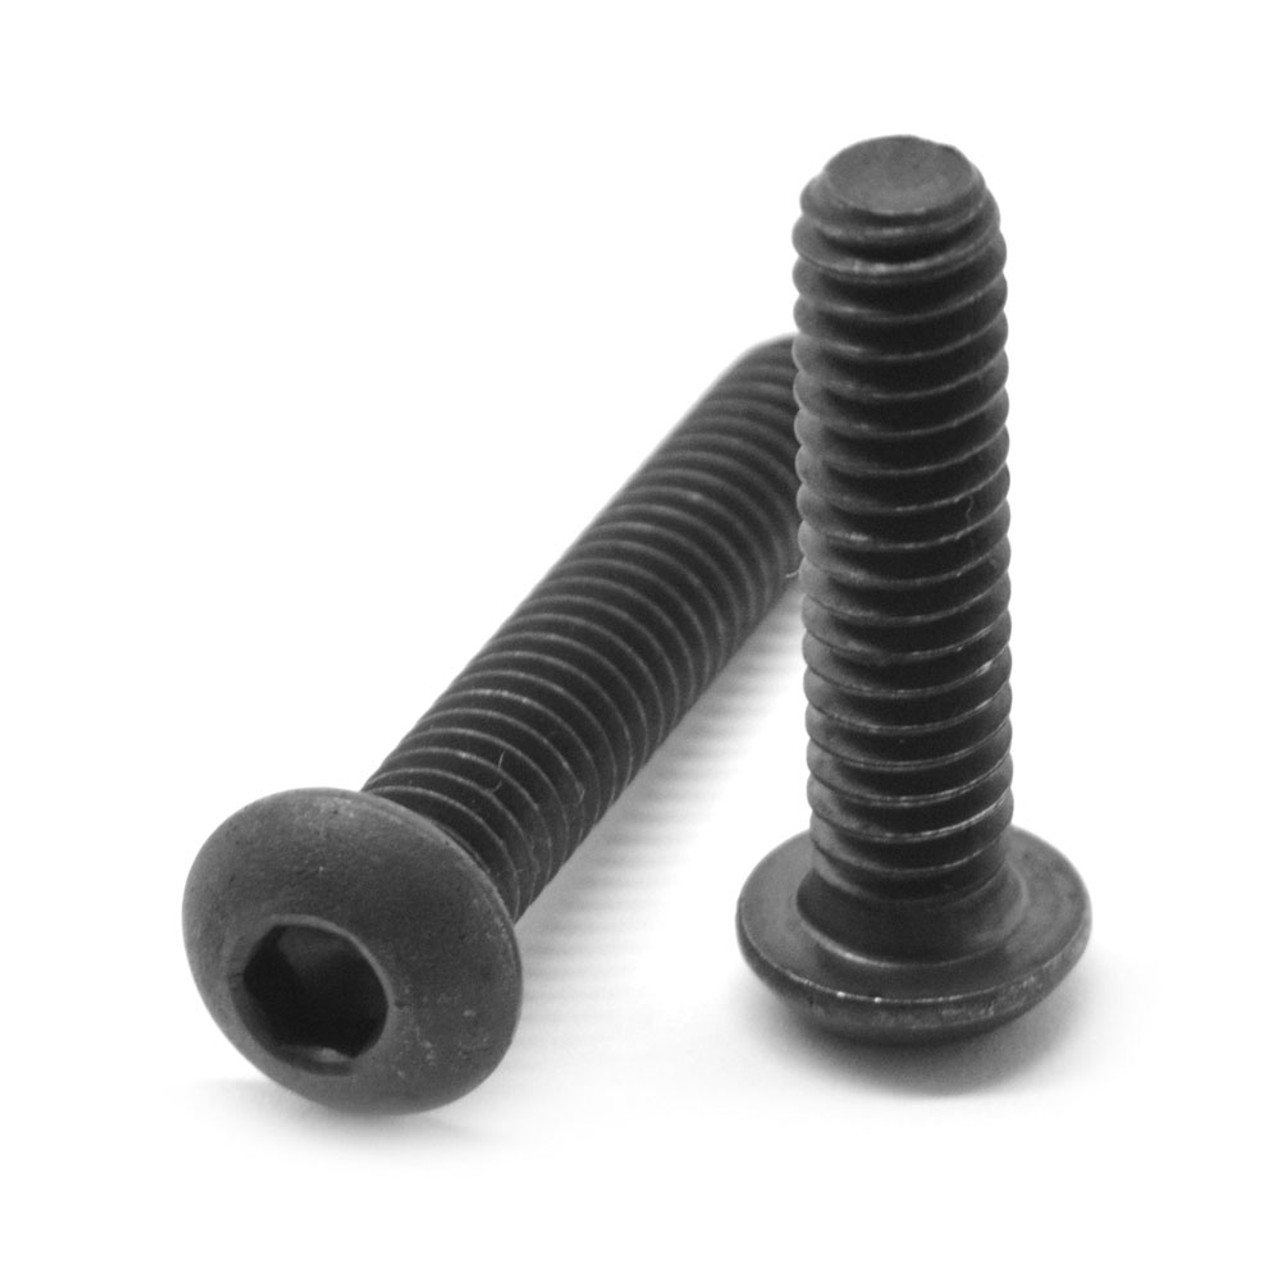 8-32 Button Head Socket Cap Screws Alloy Steel Grade 8 Black Oxide Allen Hex 